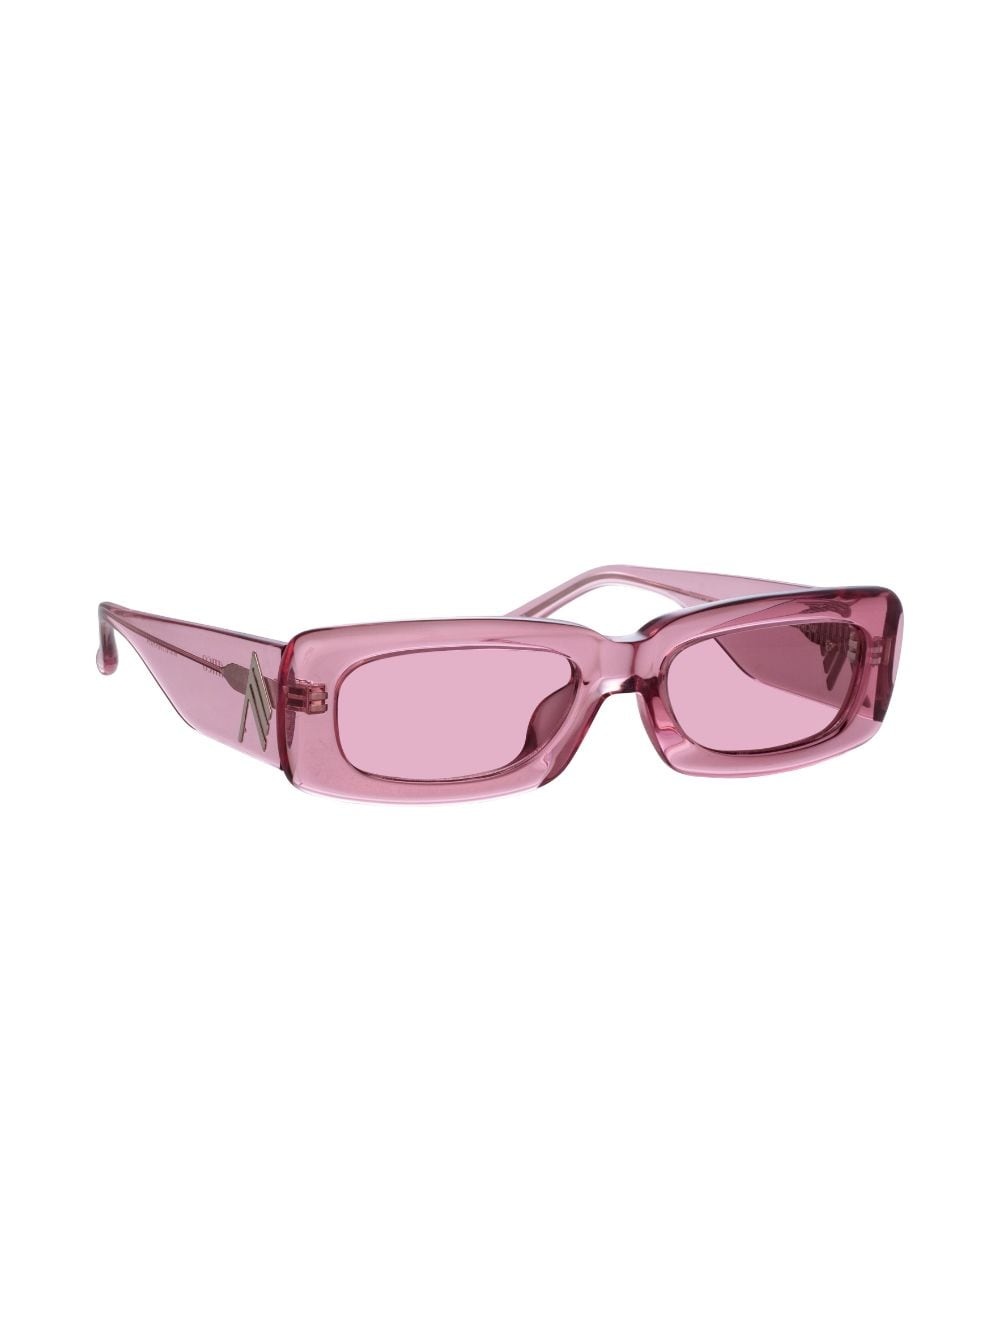 x Linda Farrow Marfa sunglasses - 2